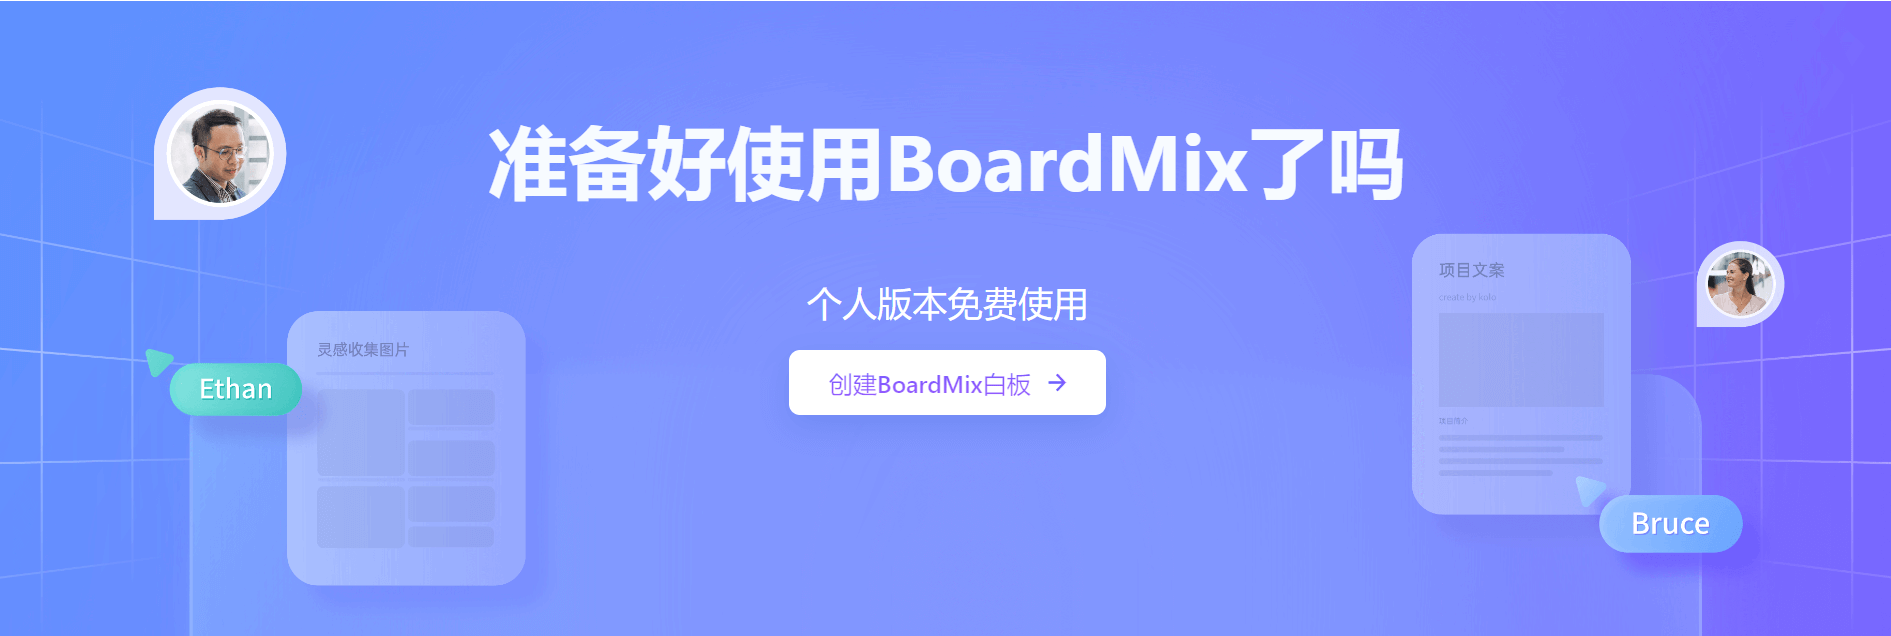 BoardMix博思白板